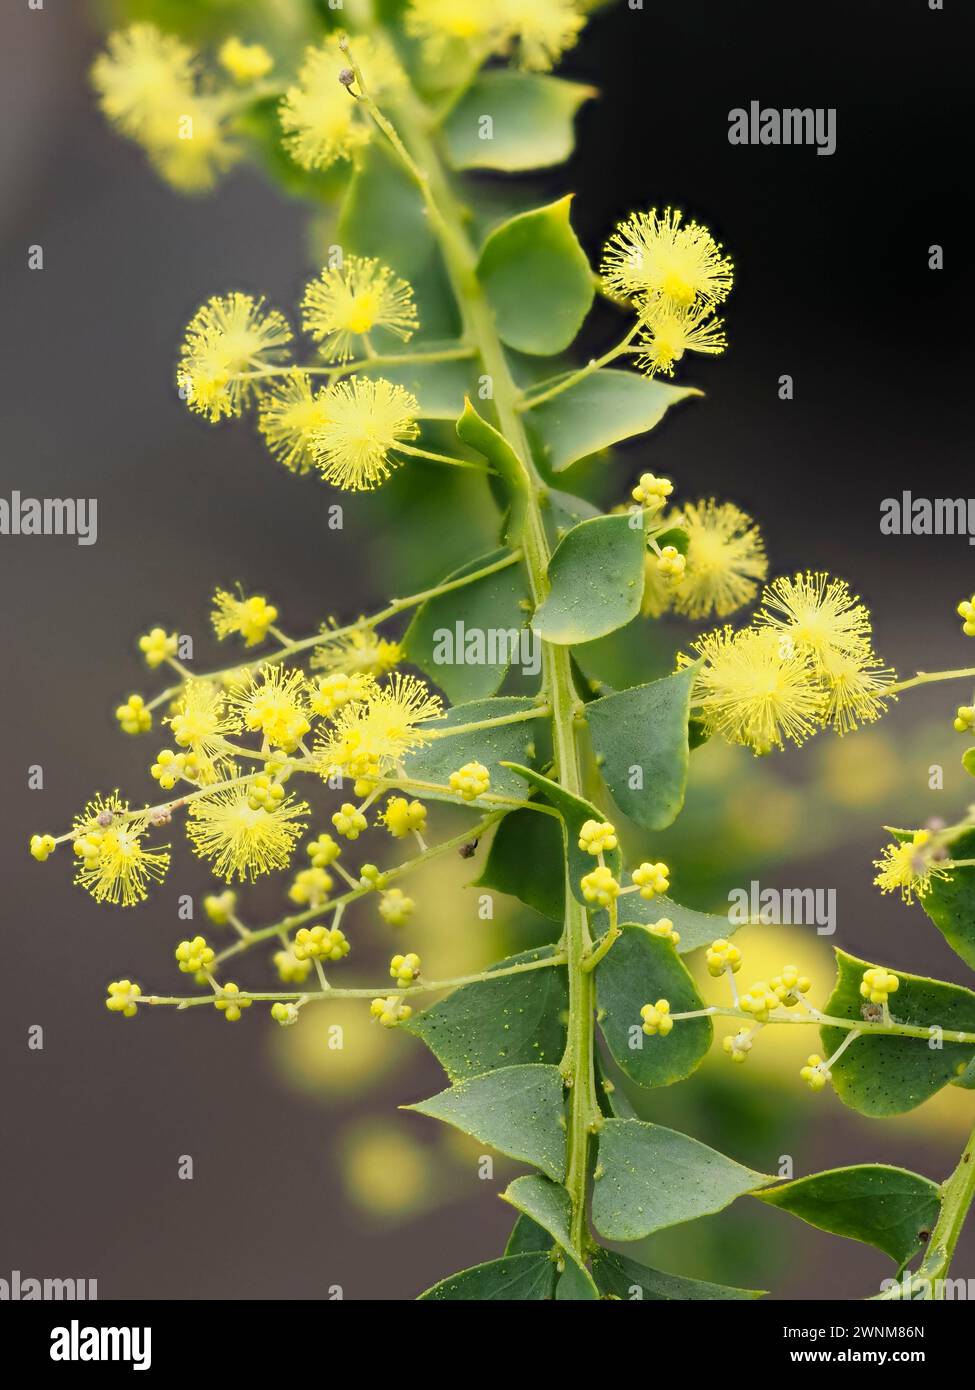 Powderpuff yellow flowers of the Australian Ovens wattle, Acacia pravissima, a half hardy evergreen shrub with silvery phyllodes Stock Photo